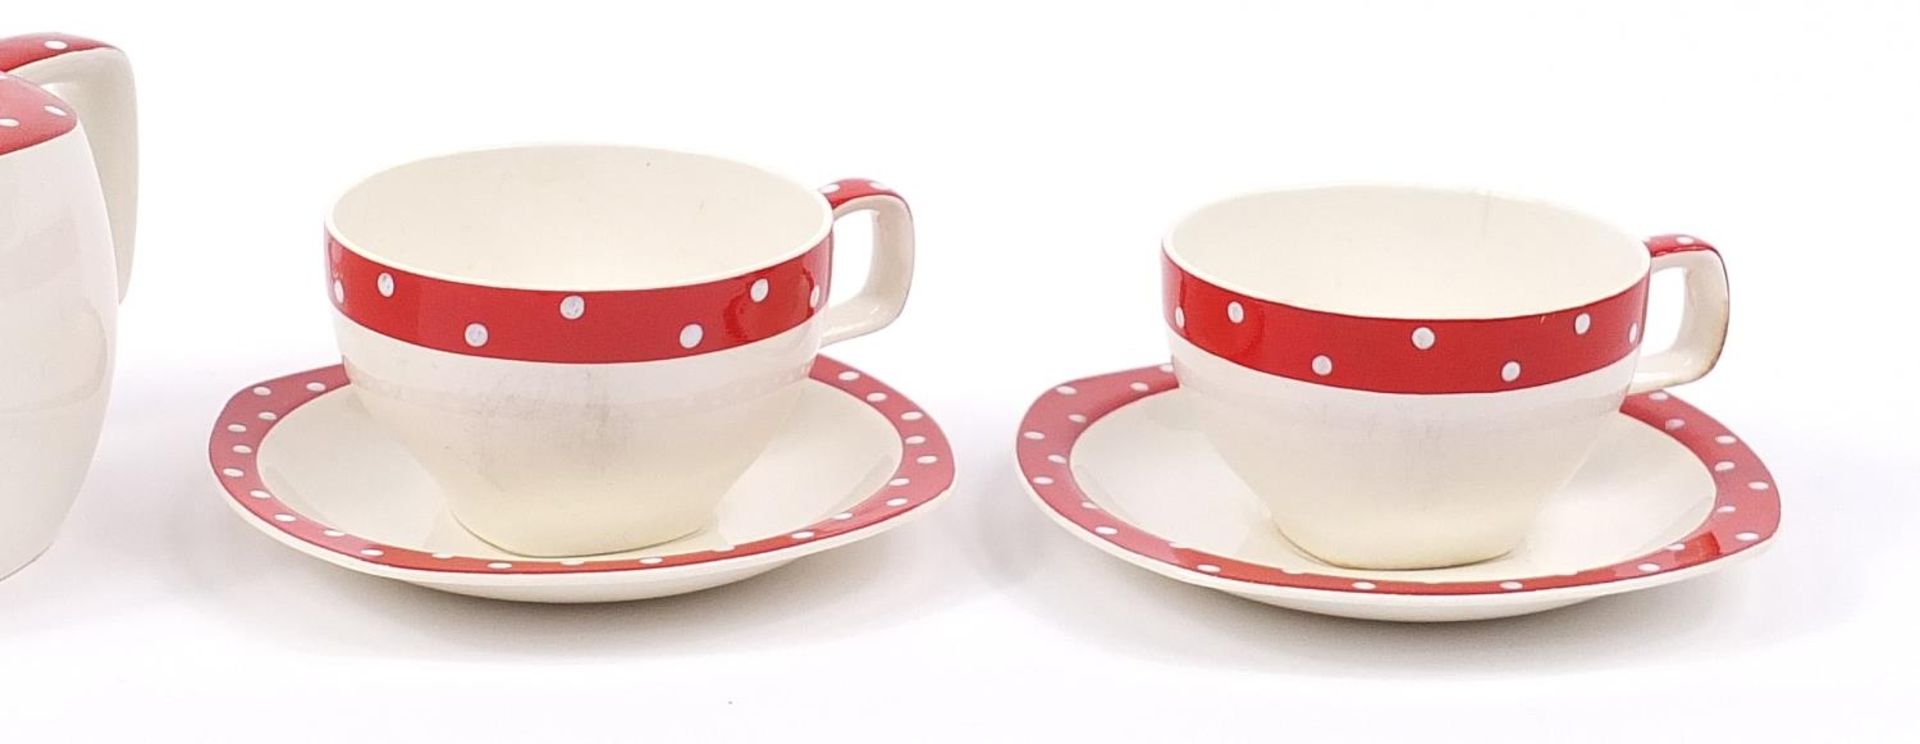 Midwinter Stylecraft Polka Dot pattern part tea service, the teapot 21cm in length - Image 3 of 6